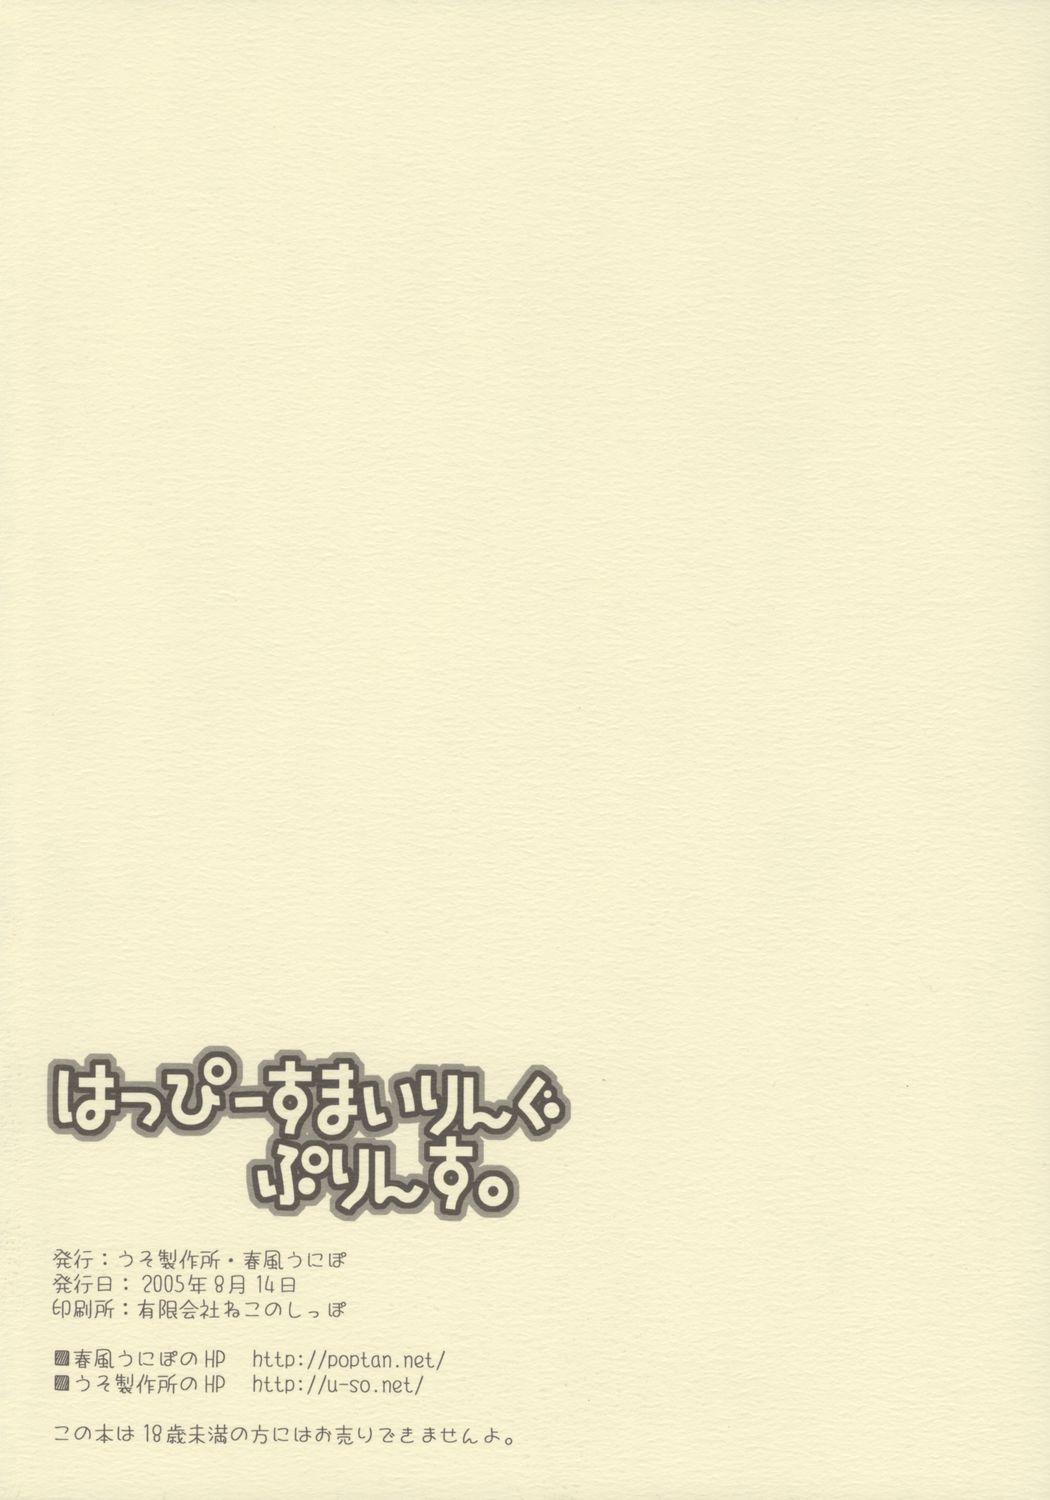 Hardcore Porn Free Happy Smiling Prince. - Fushigiboshi no futagohime Free Fuck - Page 22